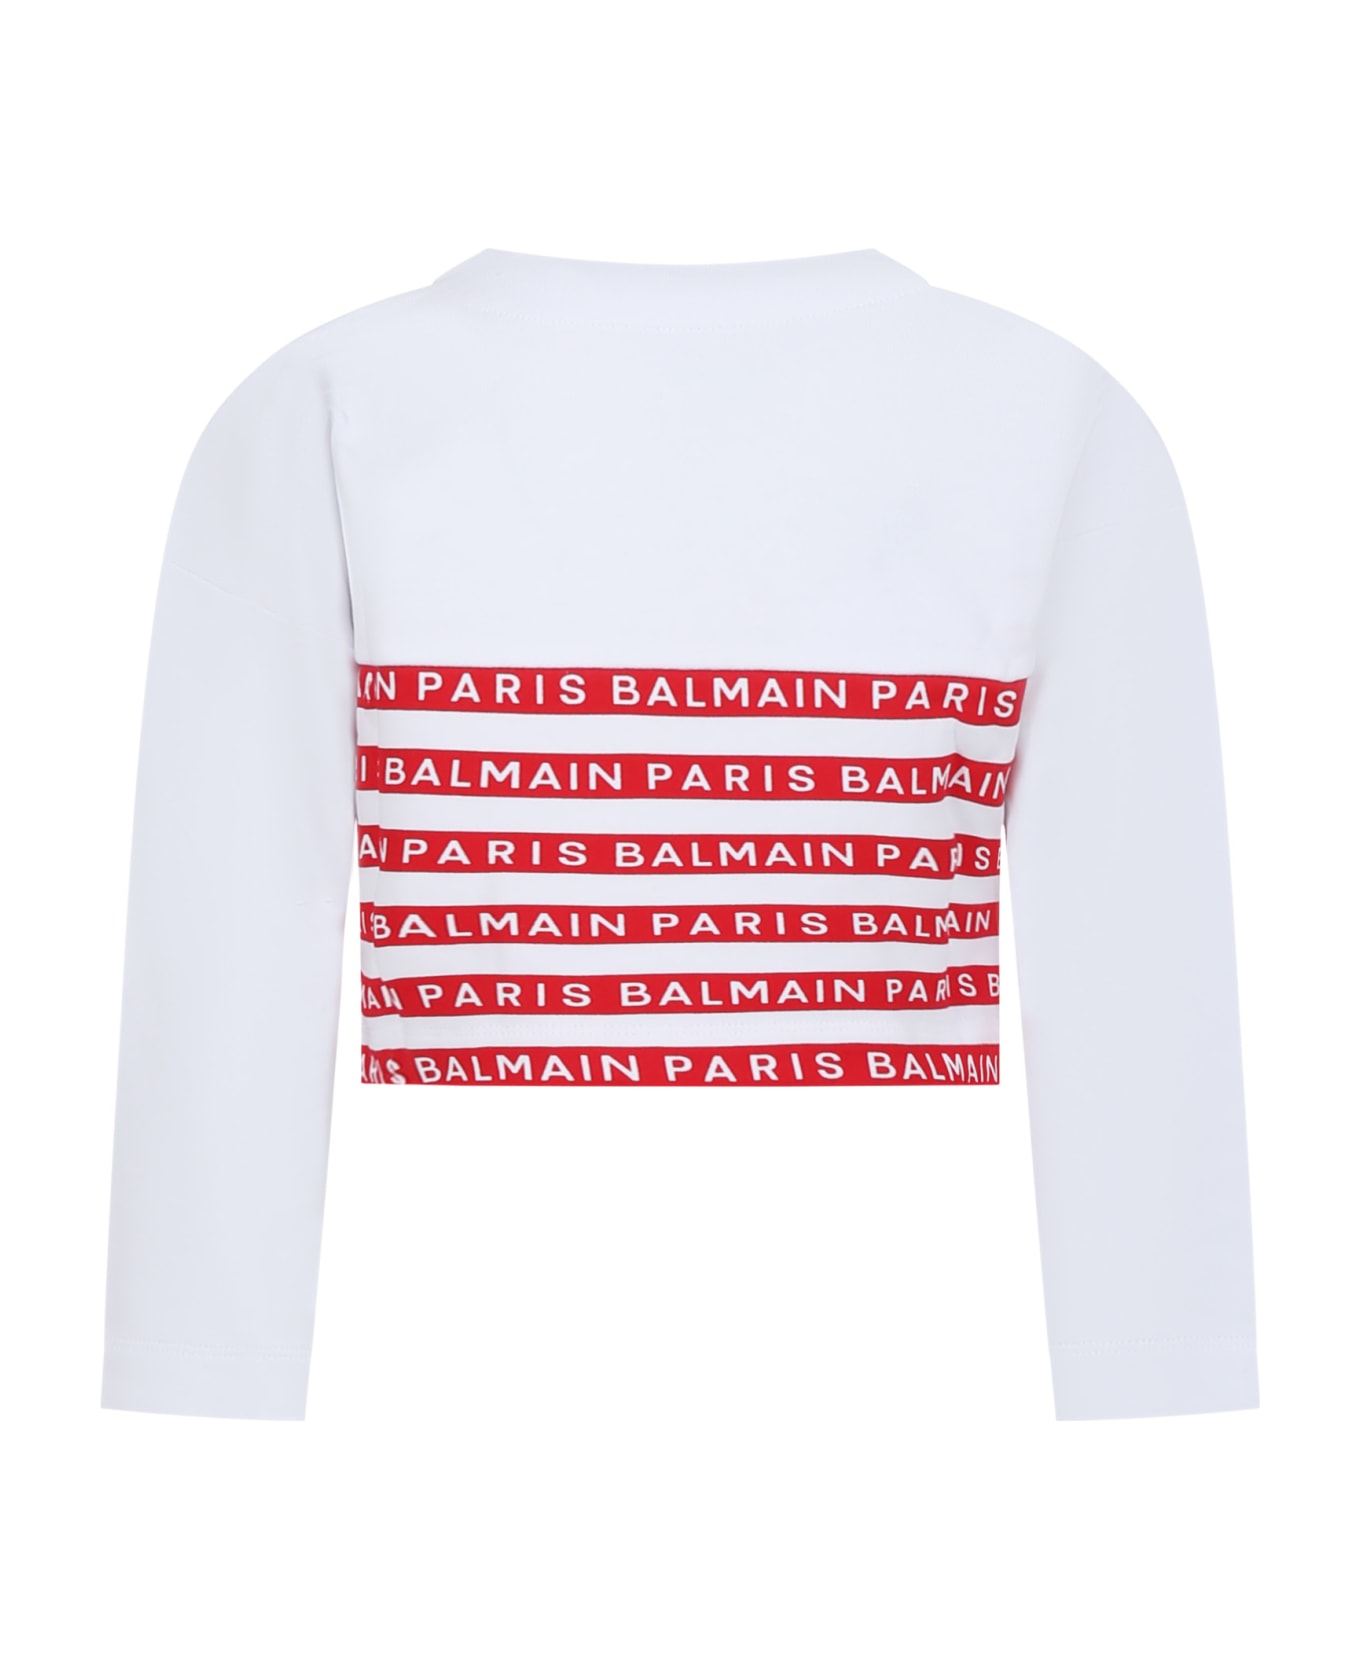 Balmain White Sweatshirt For Girl With Red Stripes And Logo - White